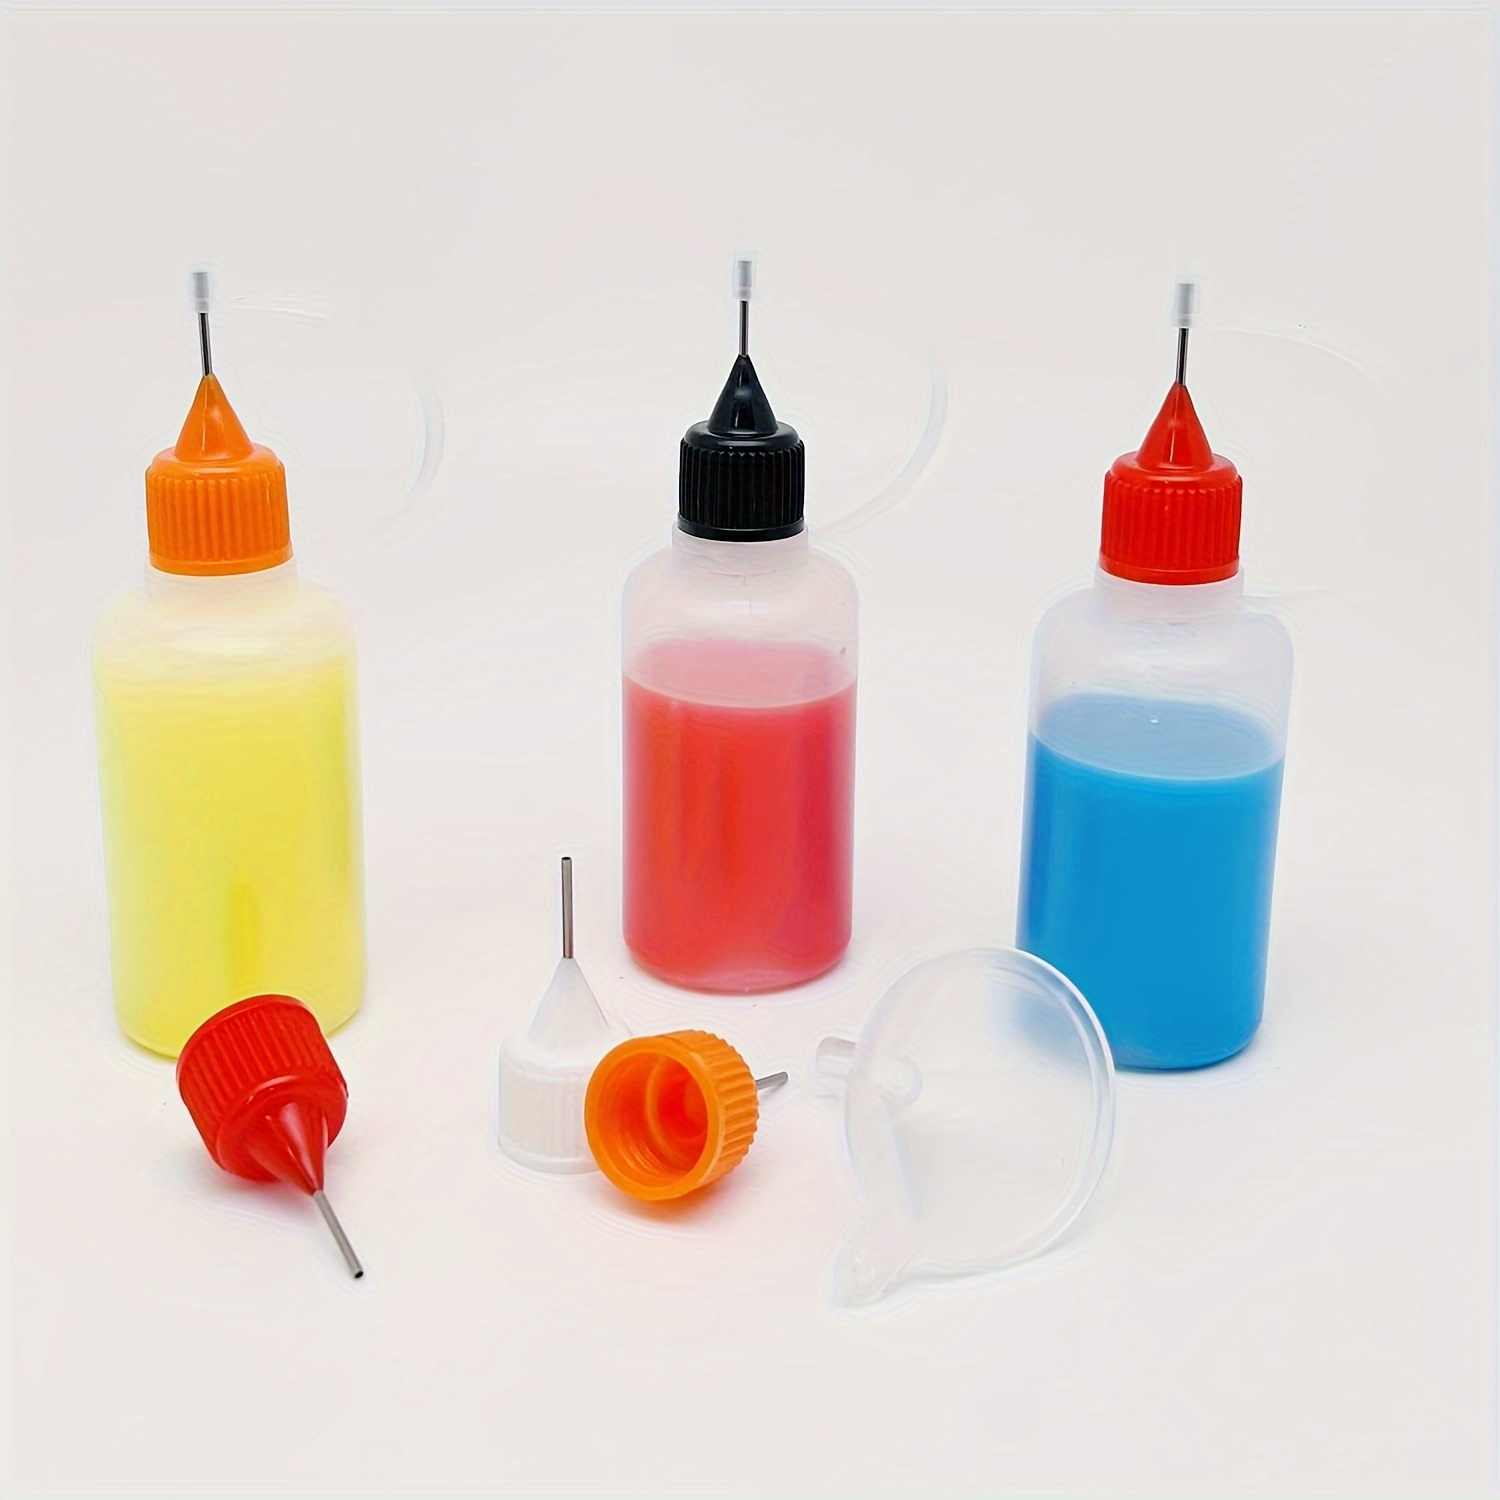 Empty Glue Bottle With Needle Precision Tip Applicator - Temu